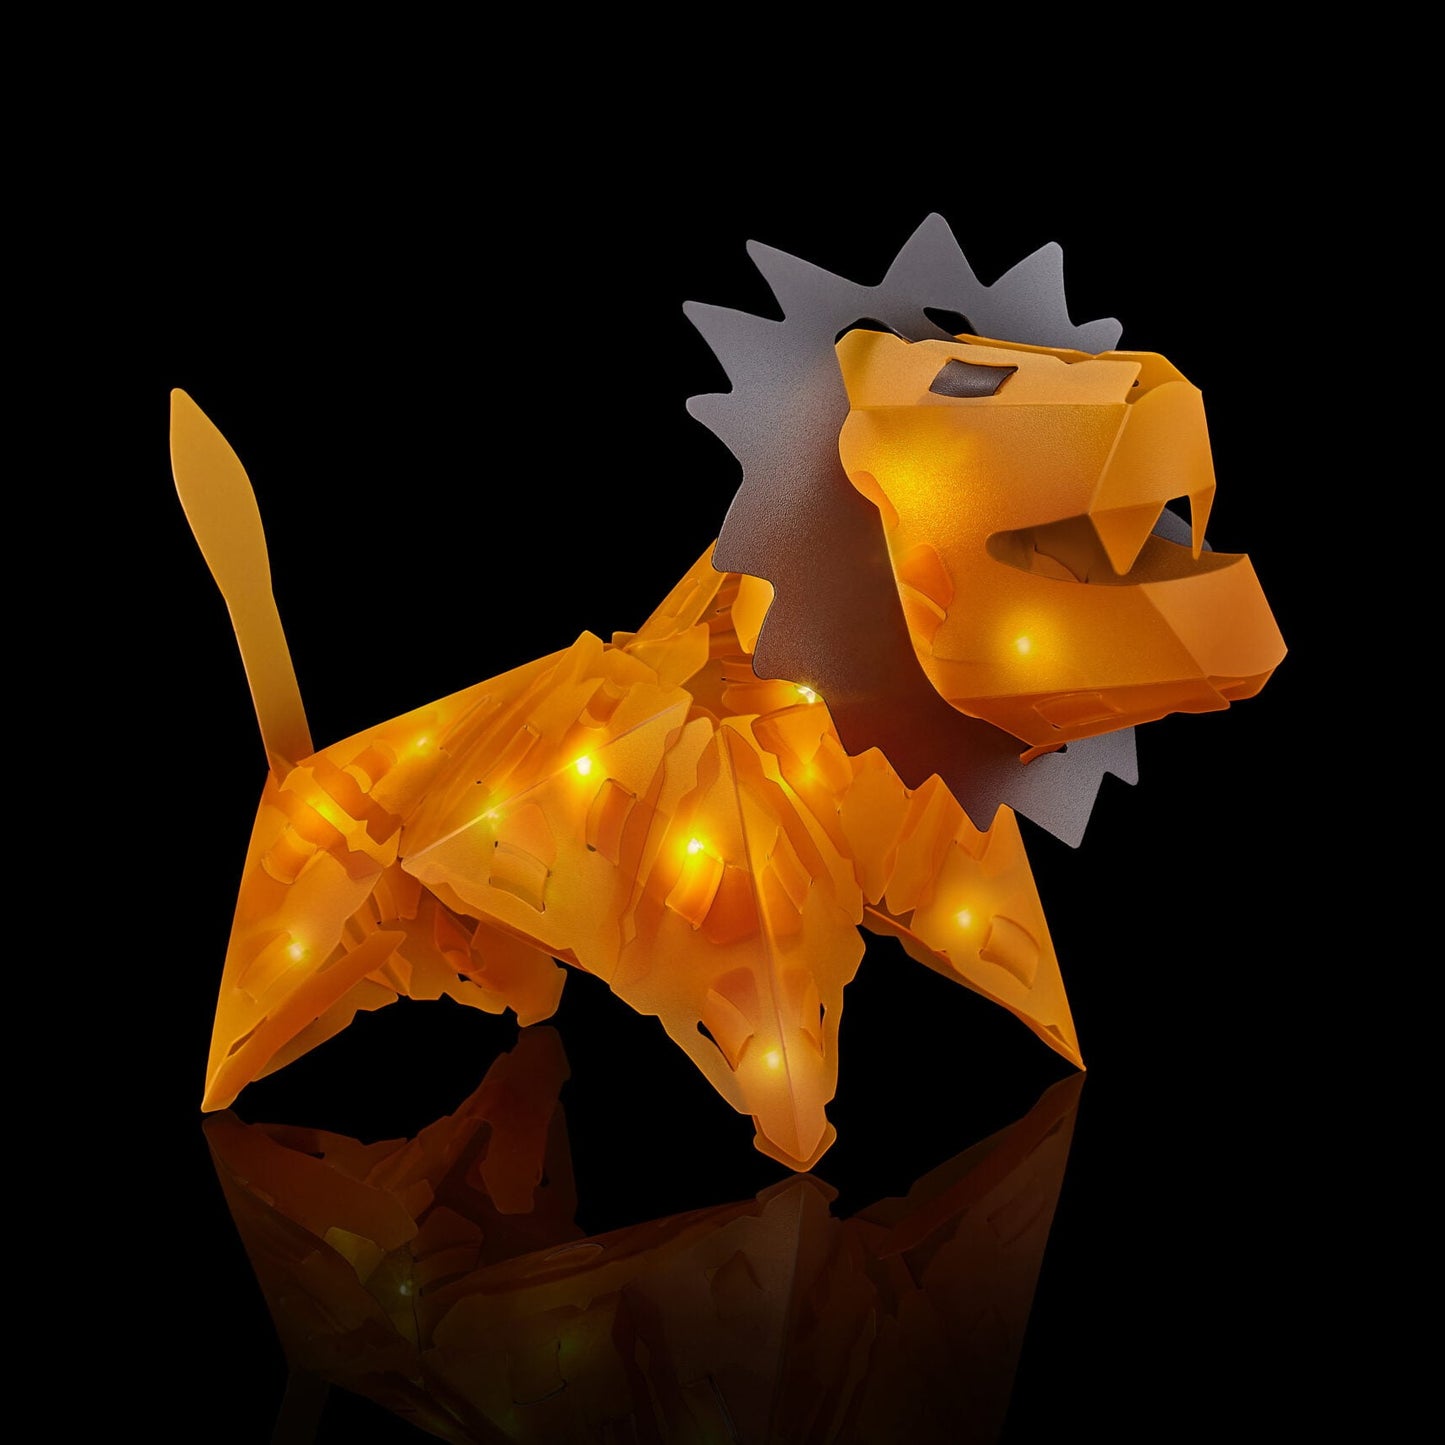 Creatto Safari Lion light model kit